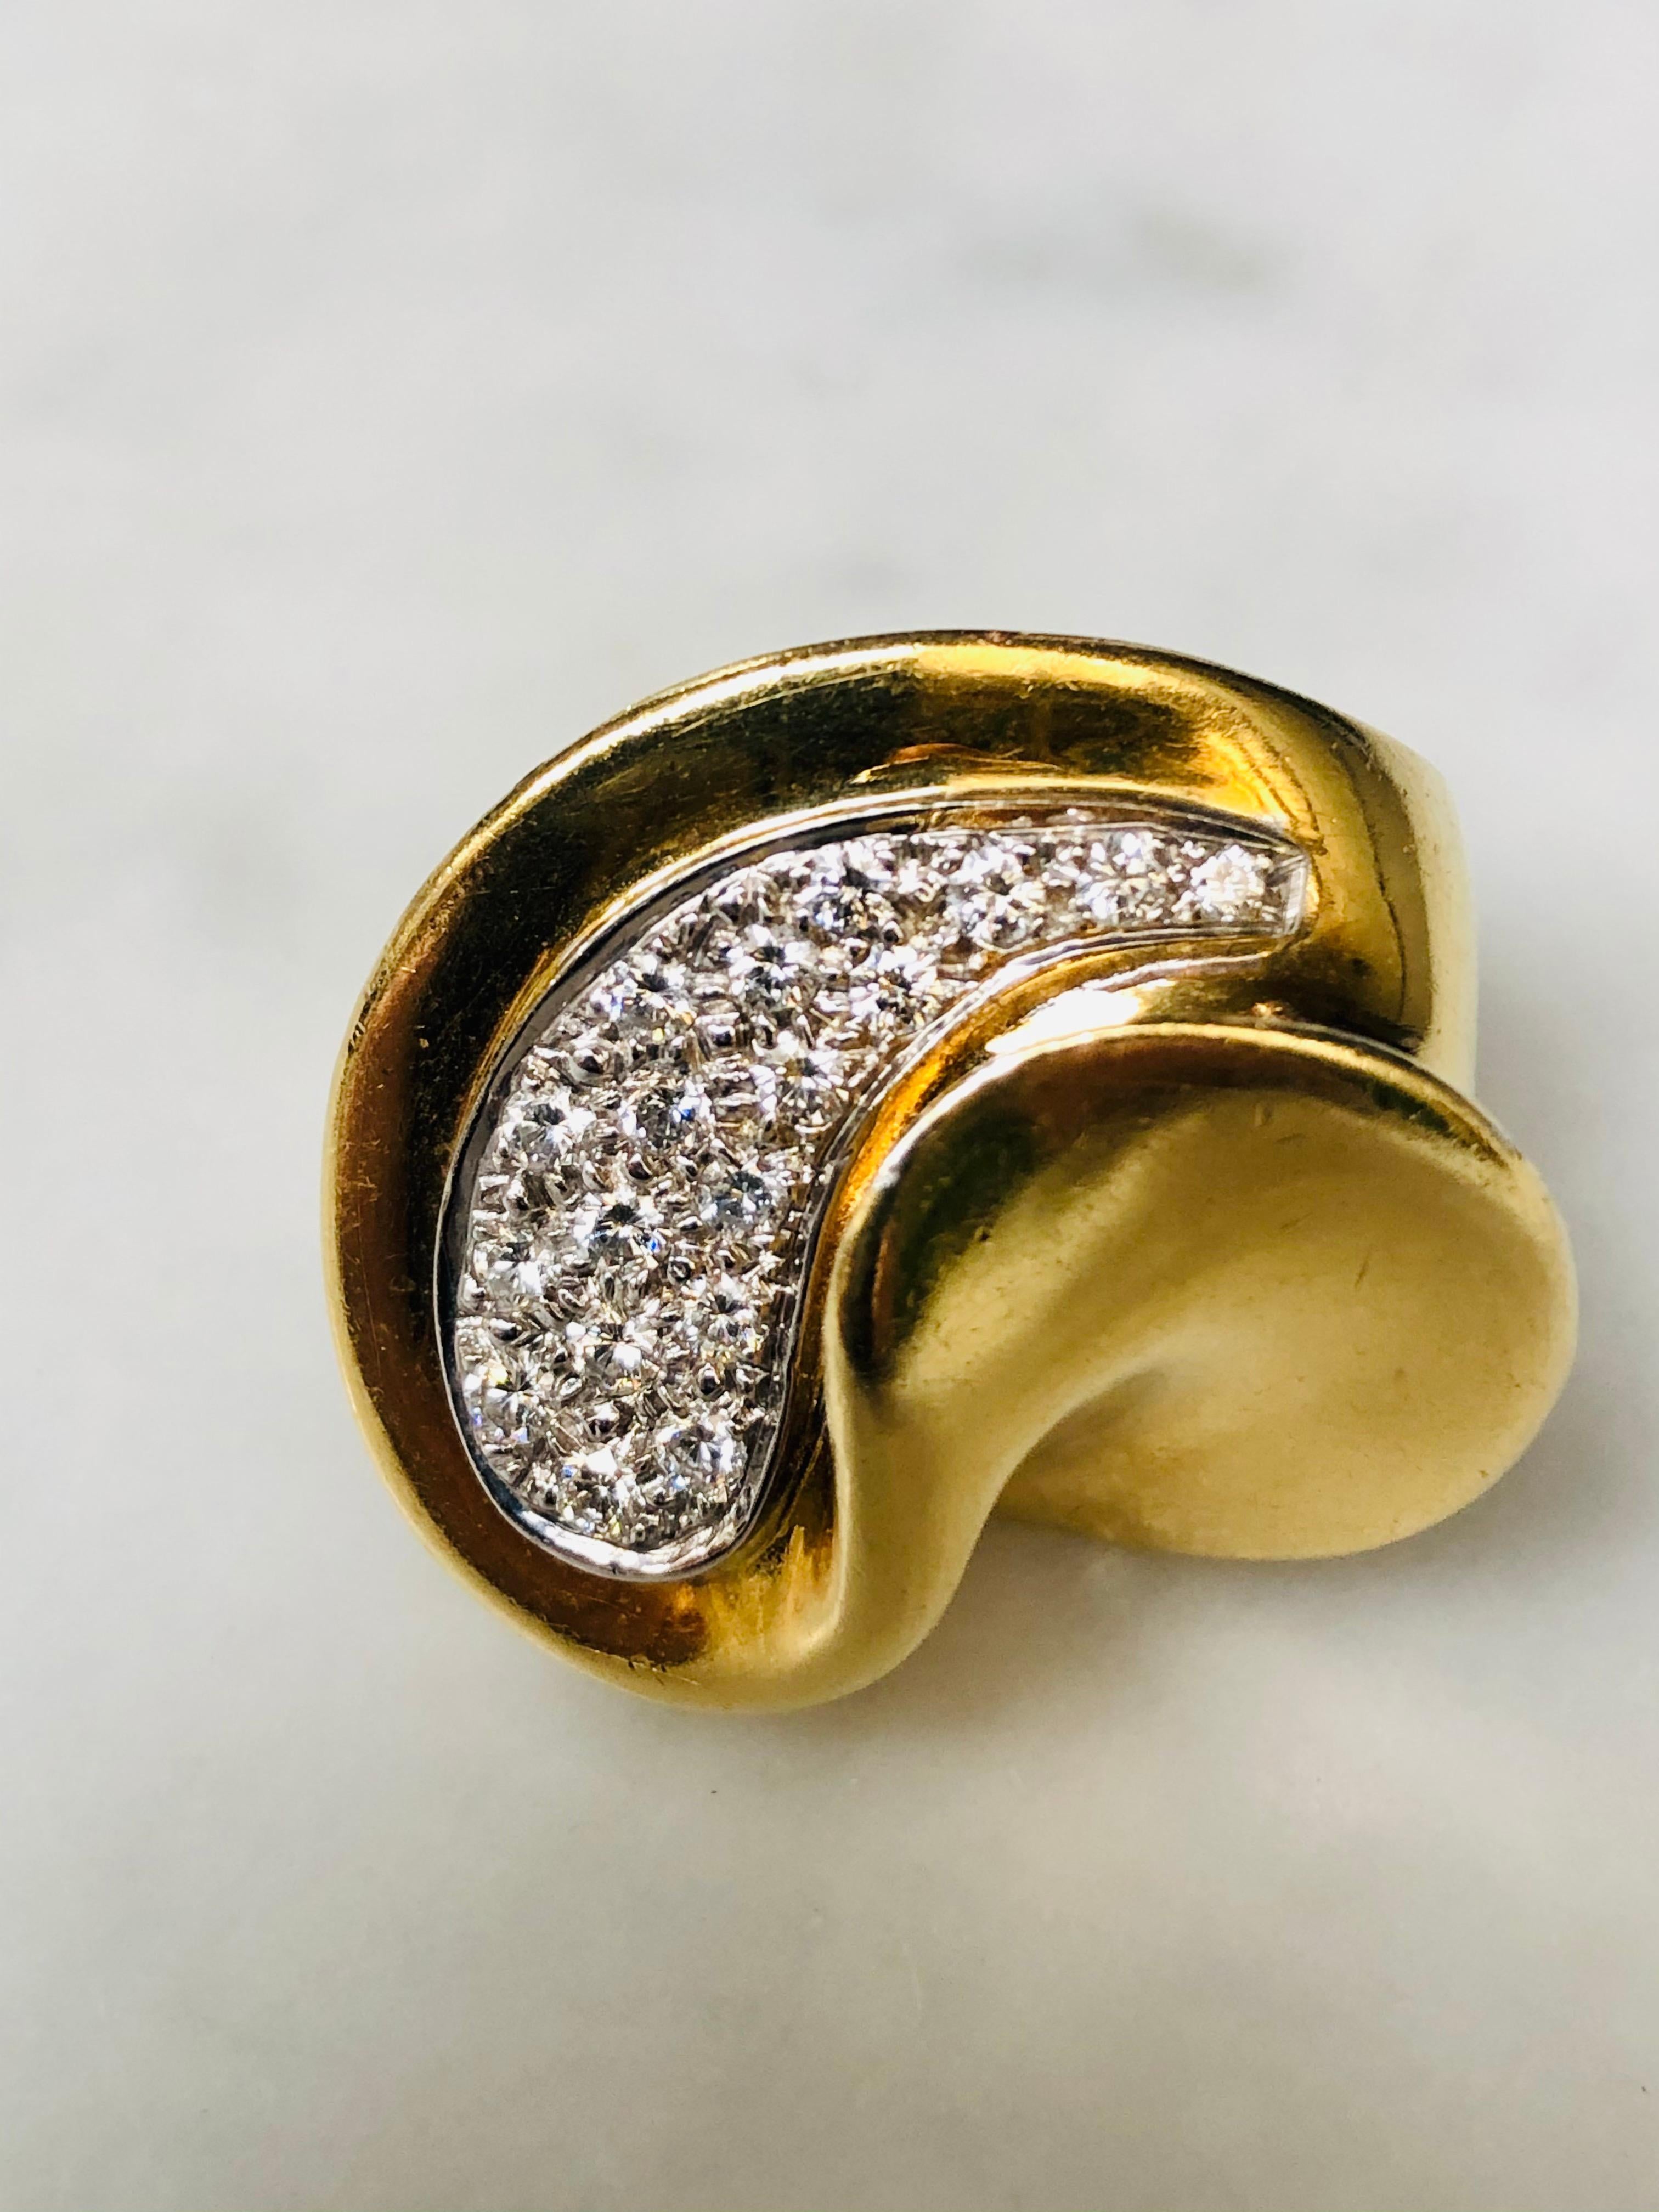 Brilliant Cut Gold and Diamond Sculptural Cocktail Ring, 18 Karat Yellow Gold